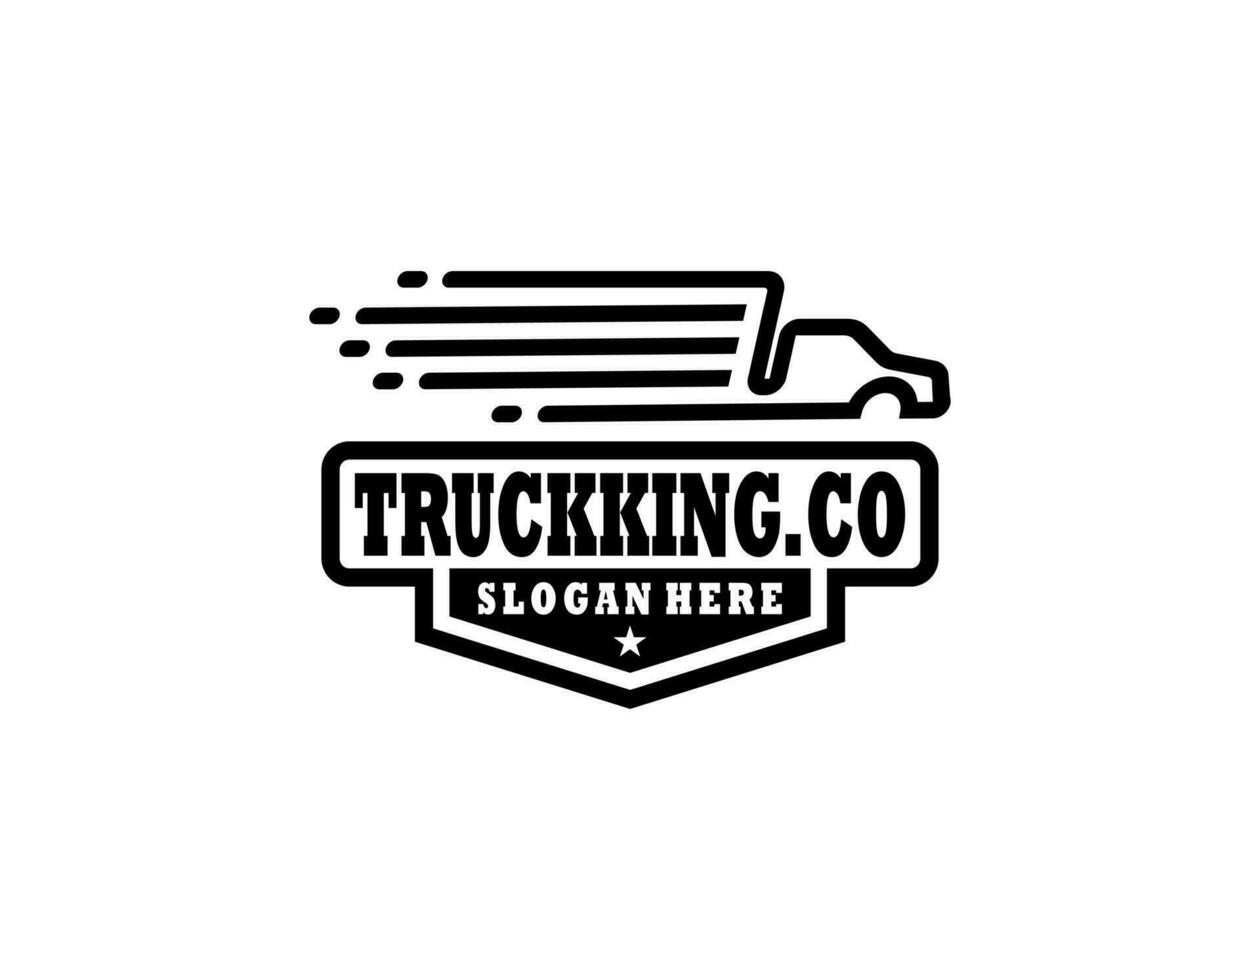 Trucking company logo. Perfect logo for trucking industry. Vector illustration. Transport trucking logo vector. Truck logo design.